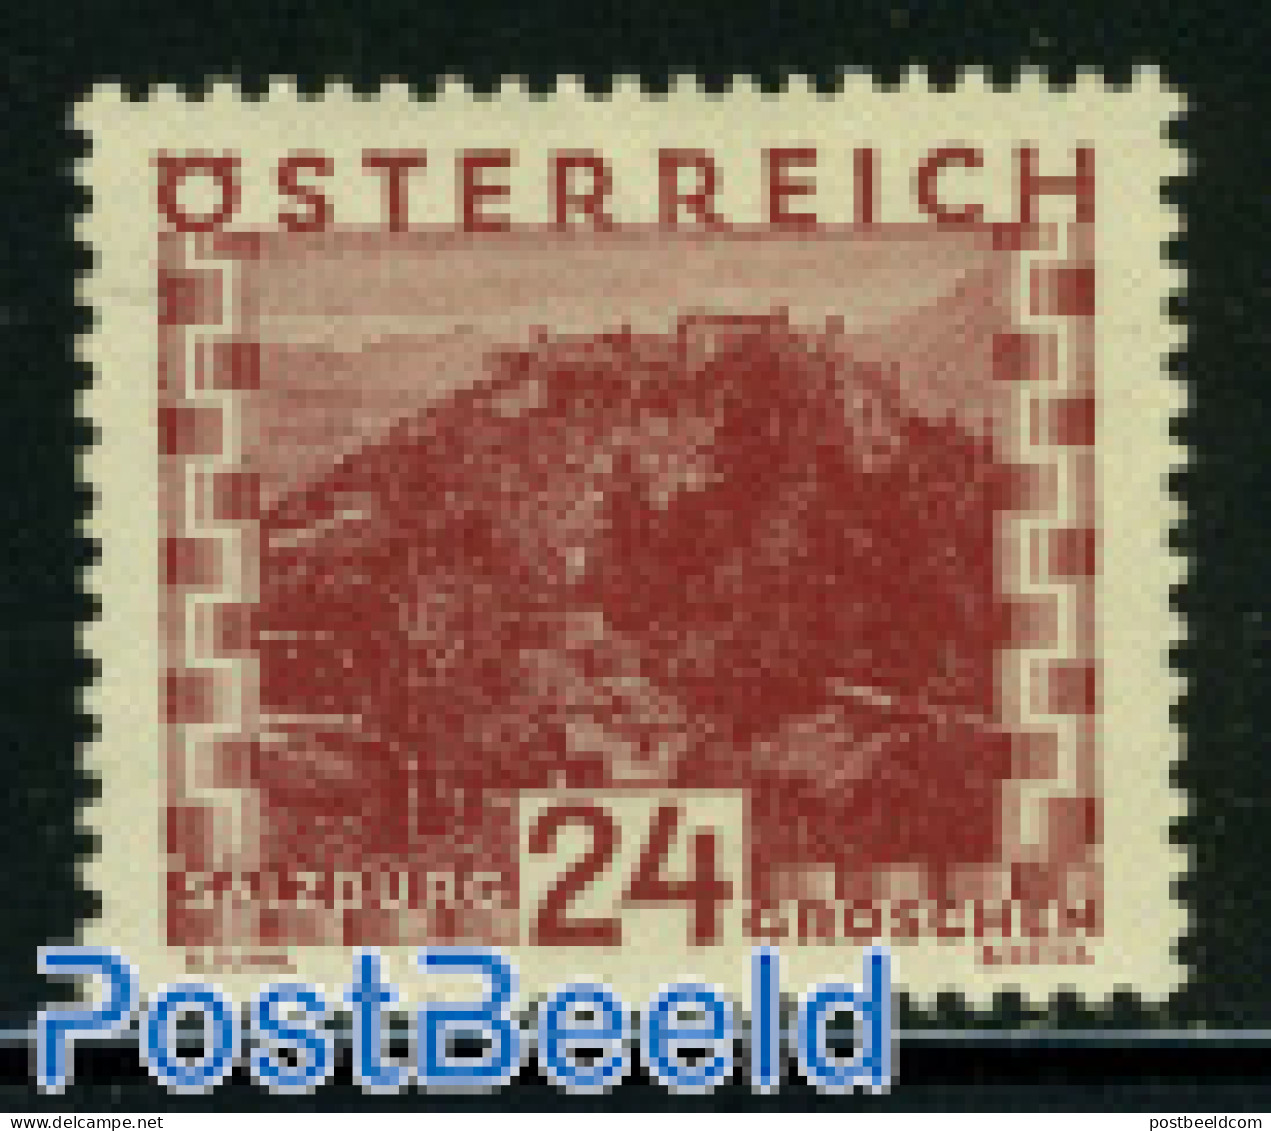 Austria 1929 24g, Redcarmine, Stamp Out Of Set, Unused (hinged) - Unused Stamps